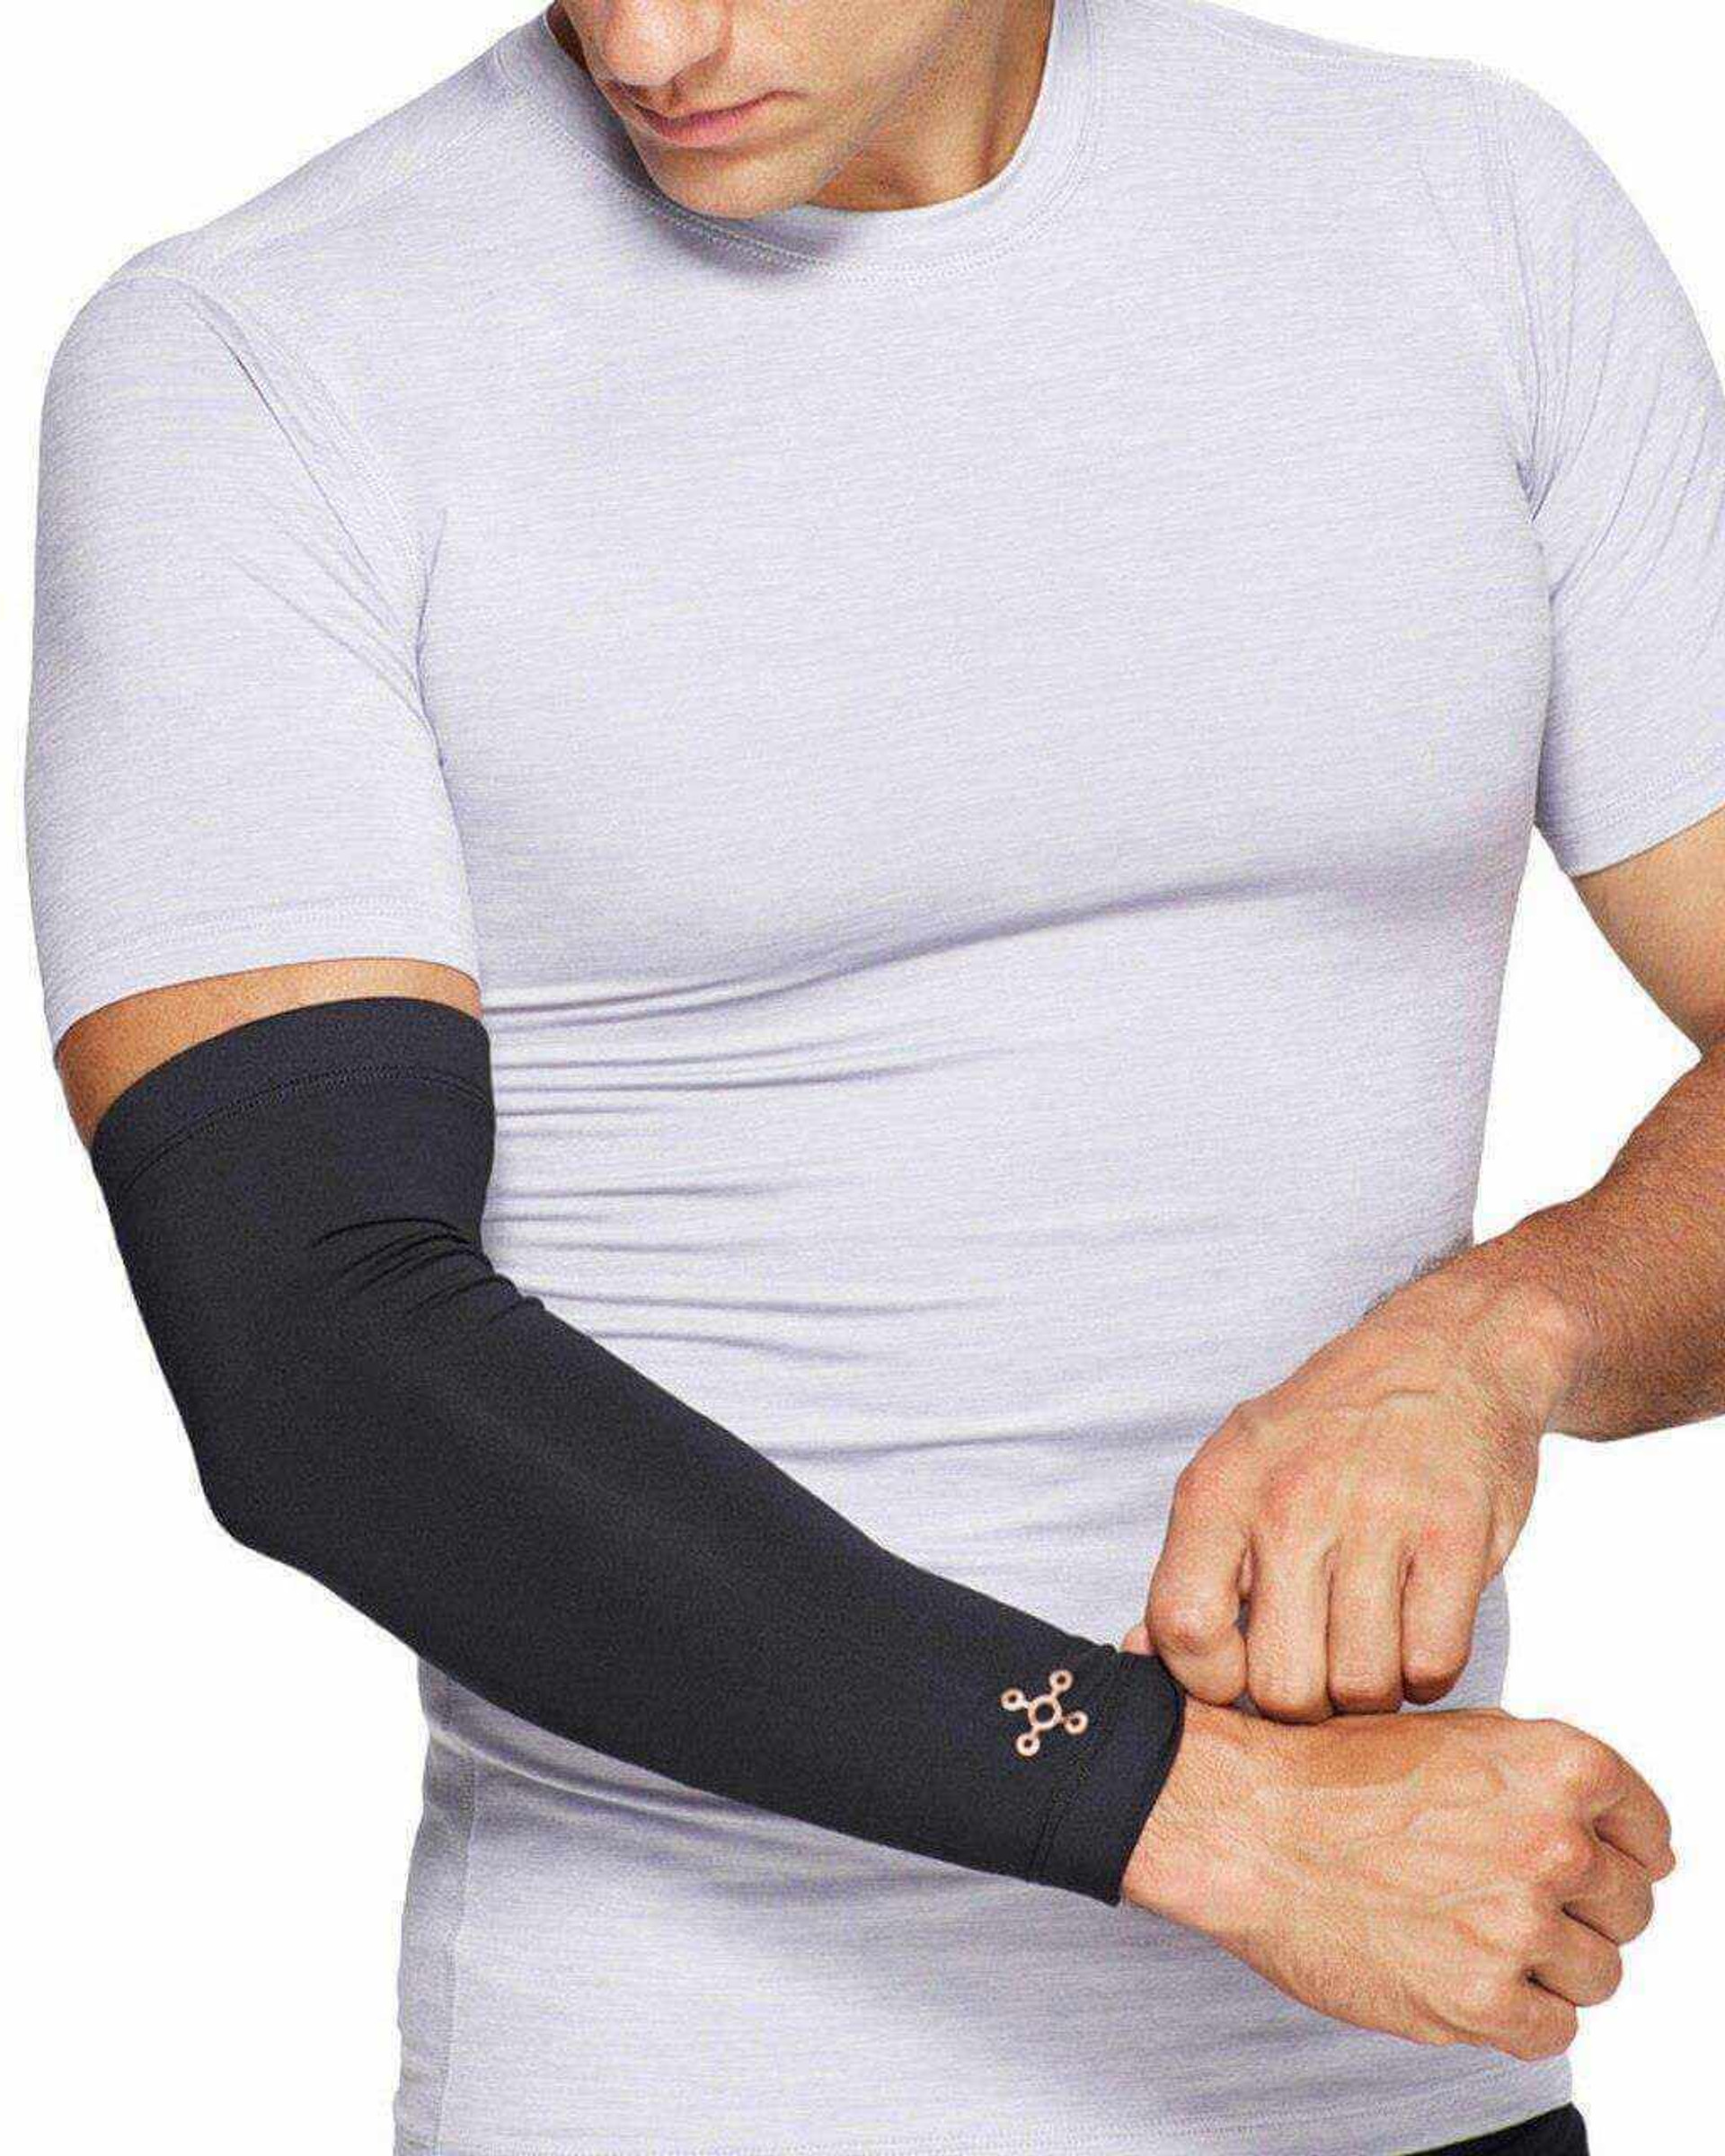 Full Arm Sleeve | Feel Better Now! | Tommie Copper®